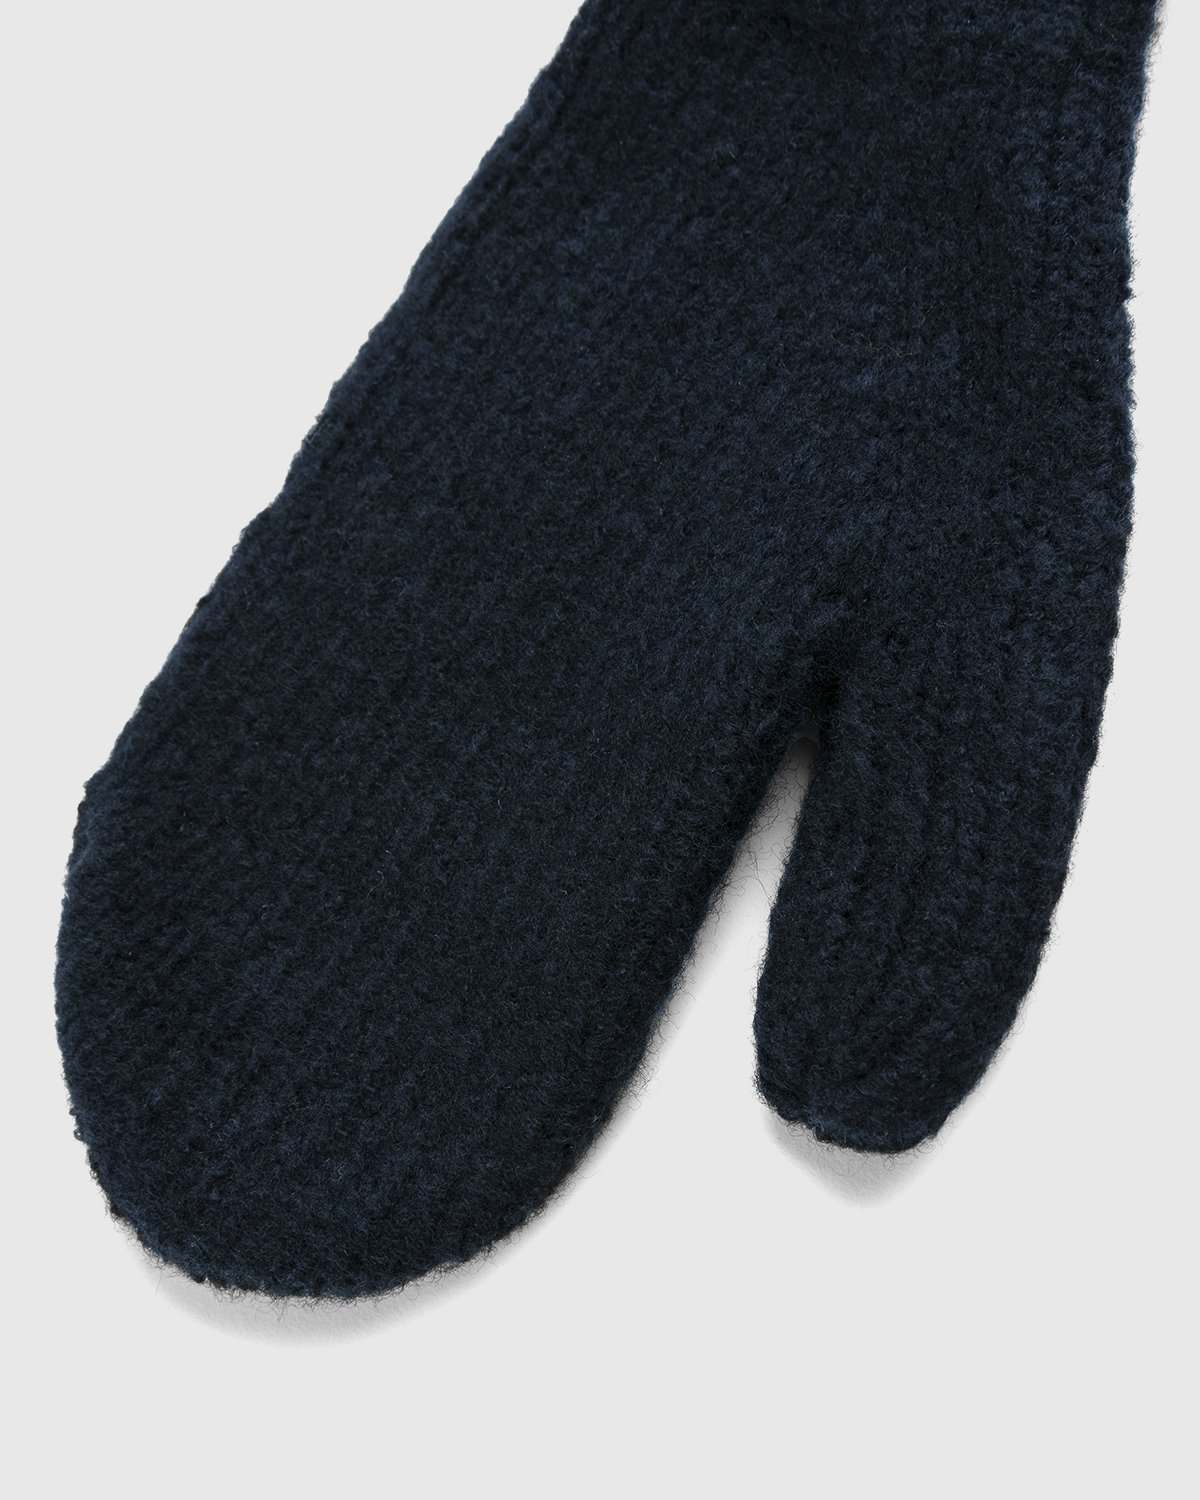 Acne Studios - Wool Blend Mittens Black - Accessories - Black - Image 2